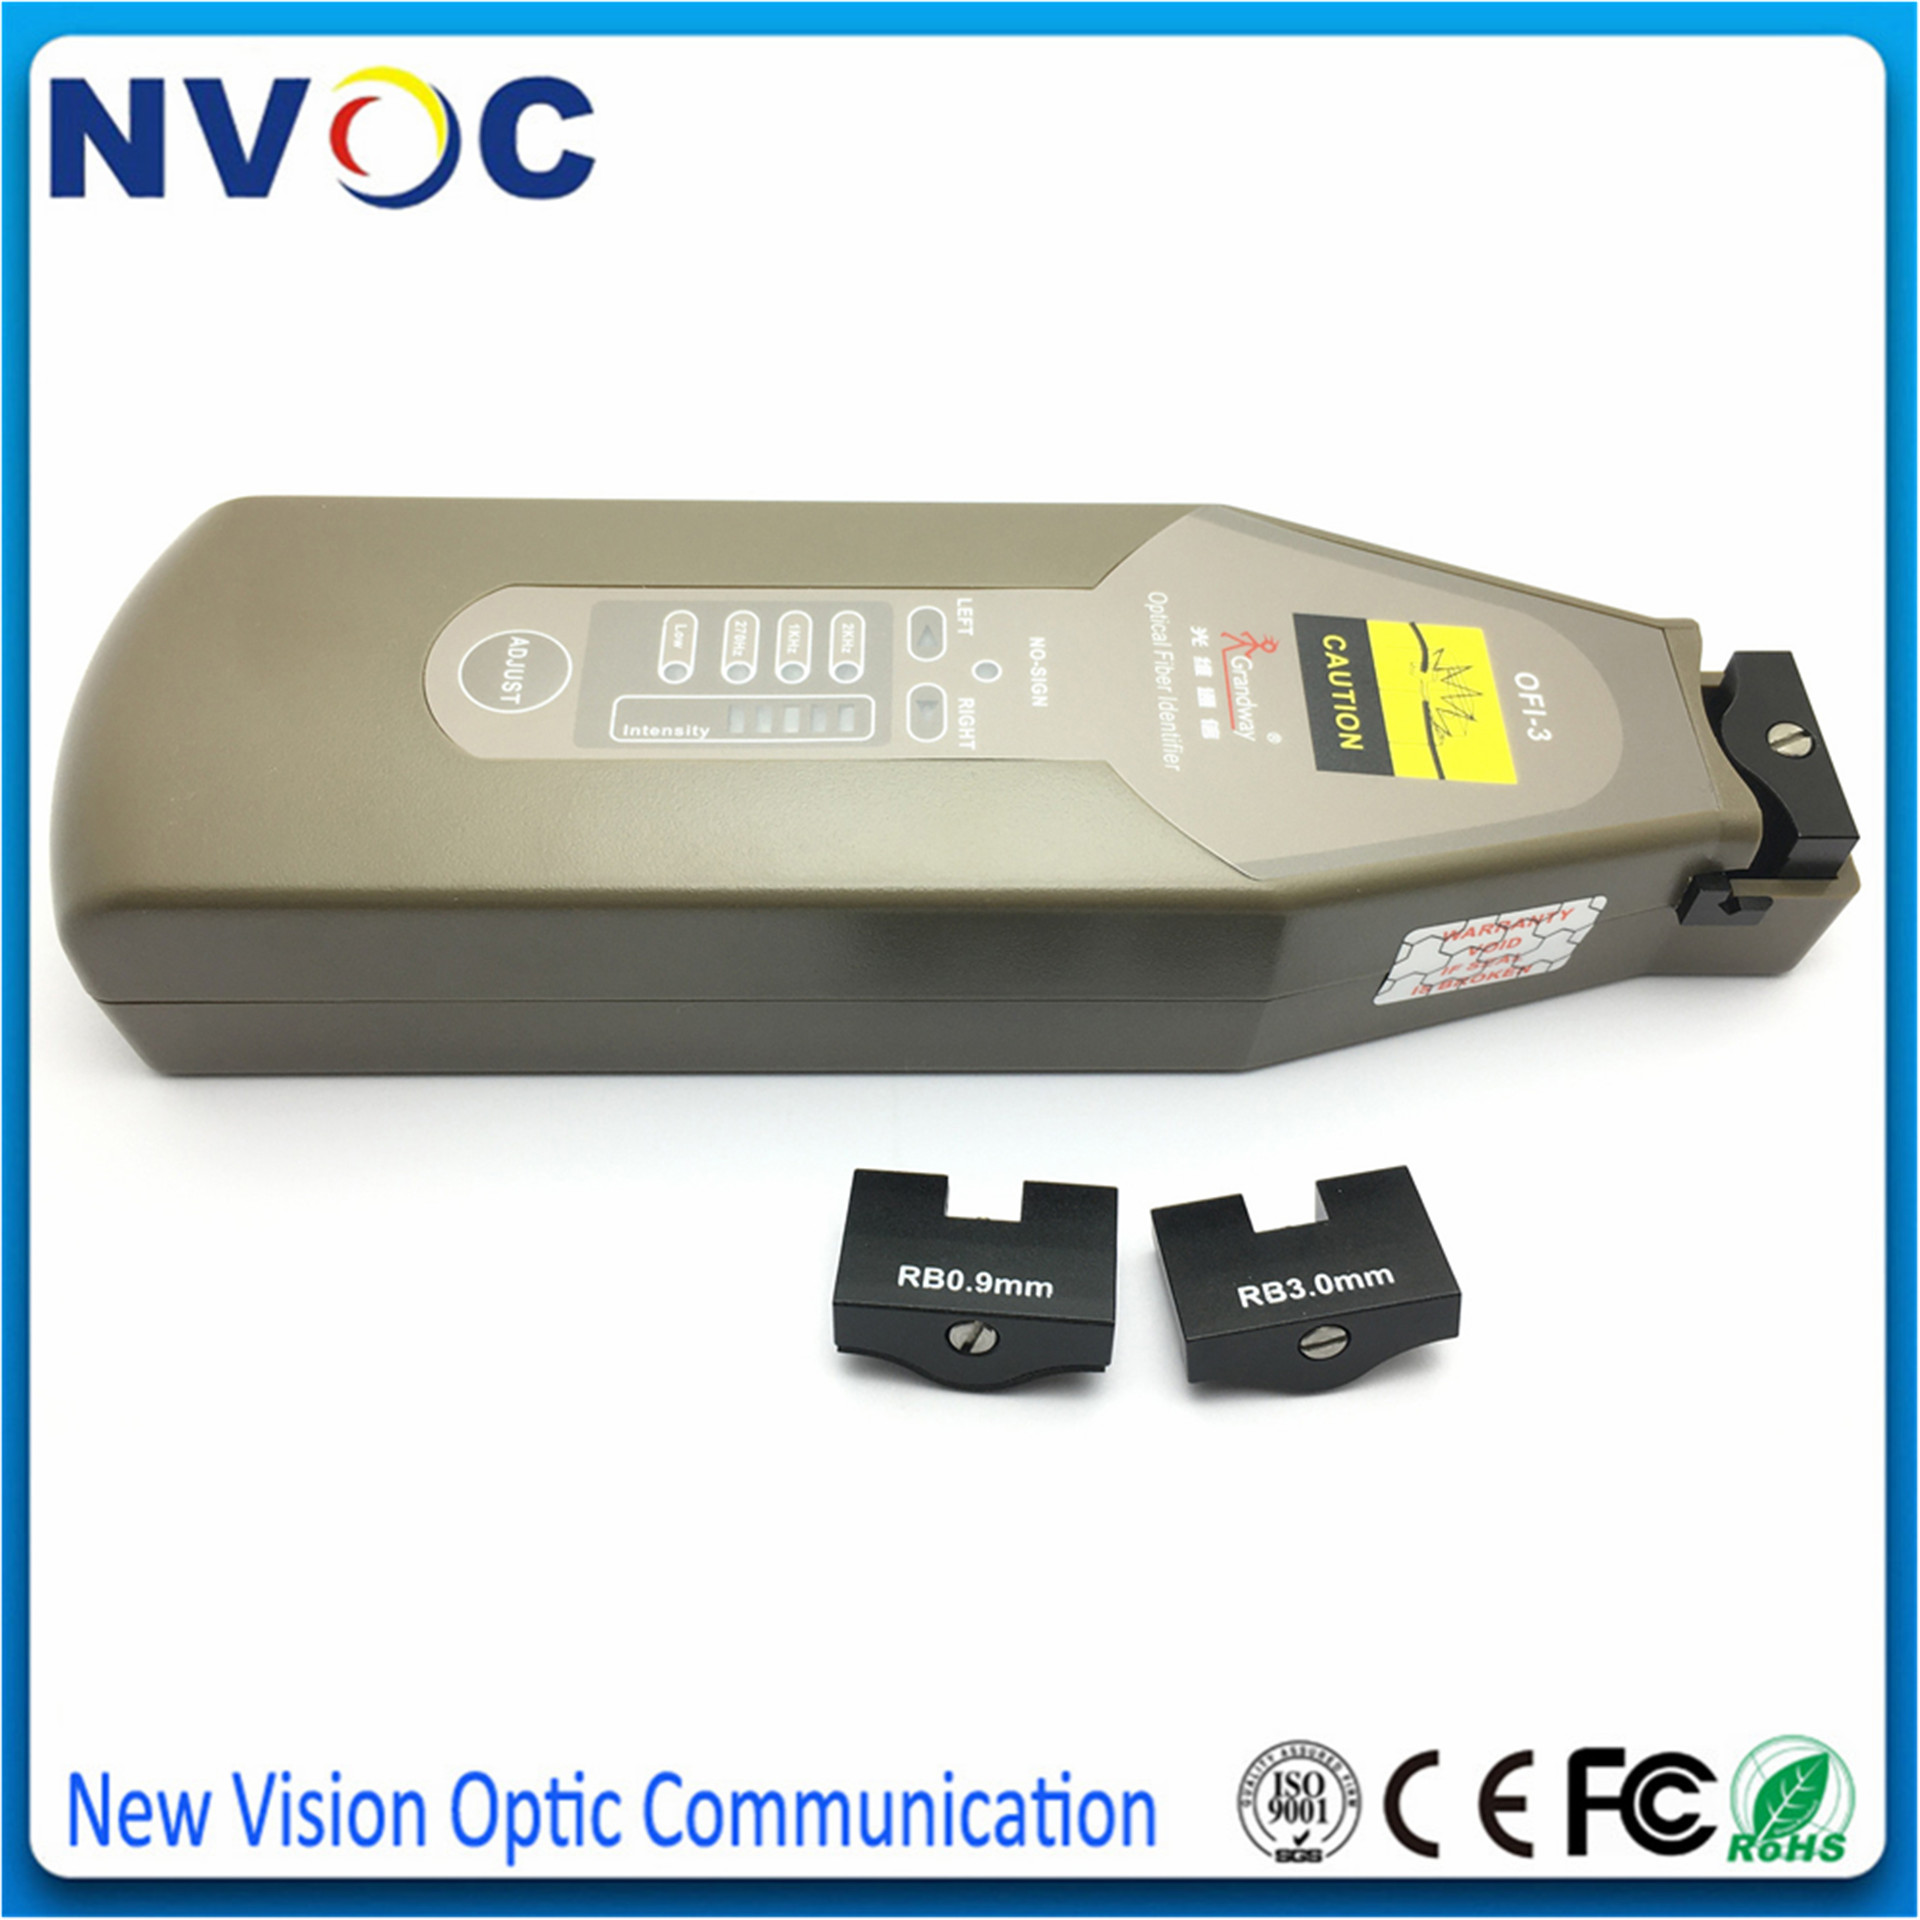 OFI-3 Mini Optic Fiber Identifier